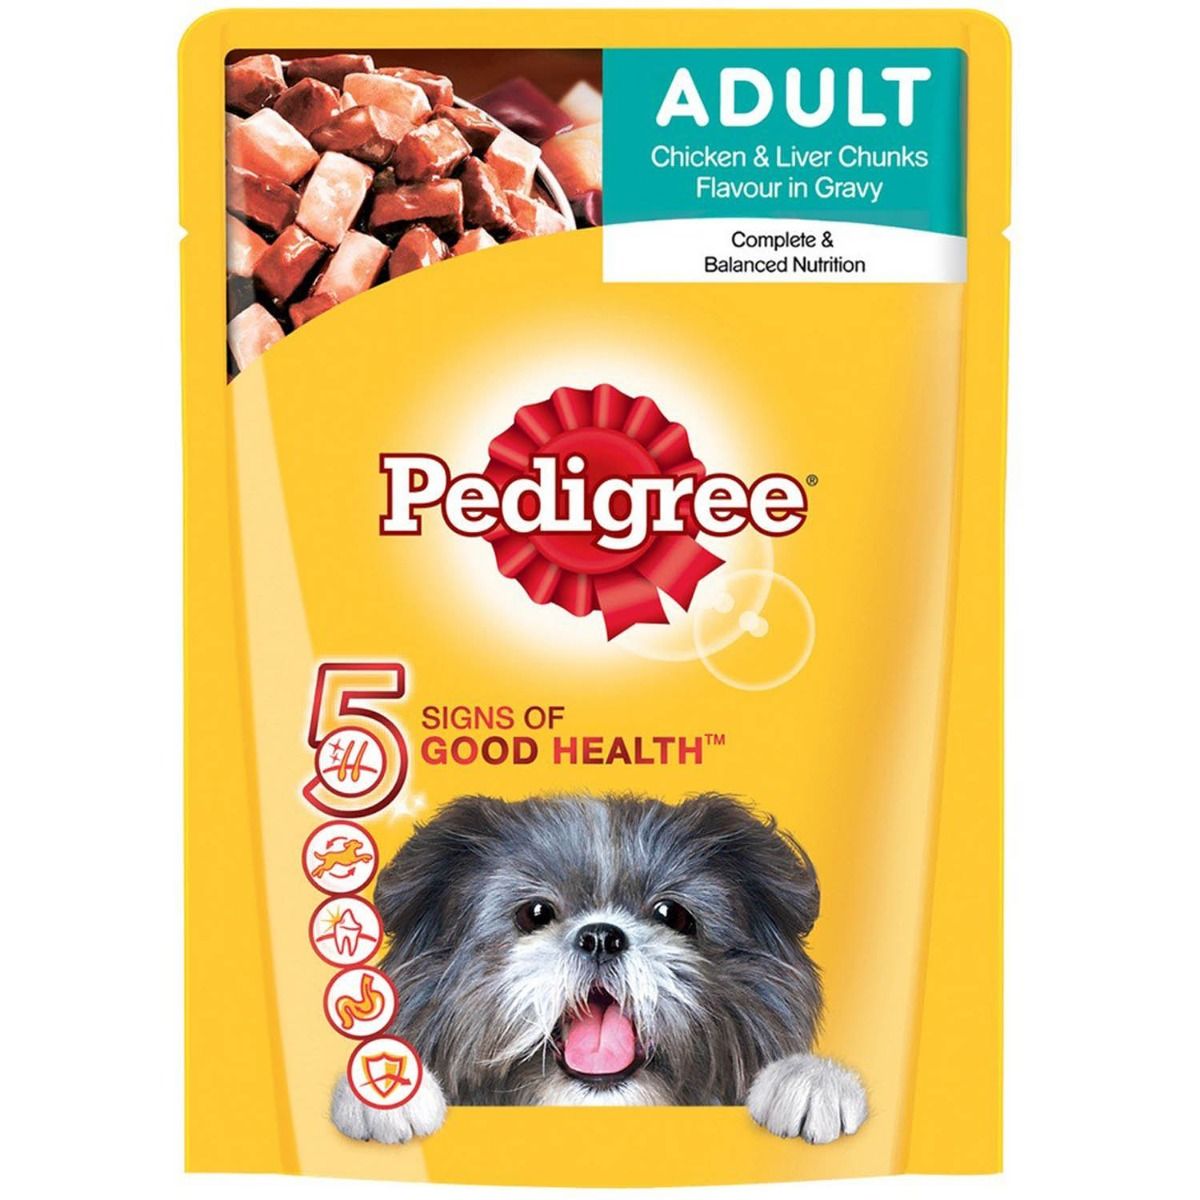 Pedigree Chicken & Liver Chunks Adult Dog Food, 80 gm, Pack of 1 